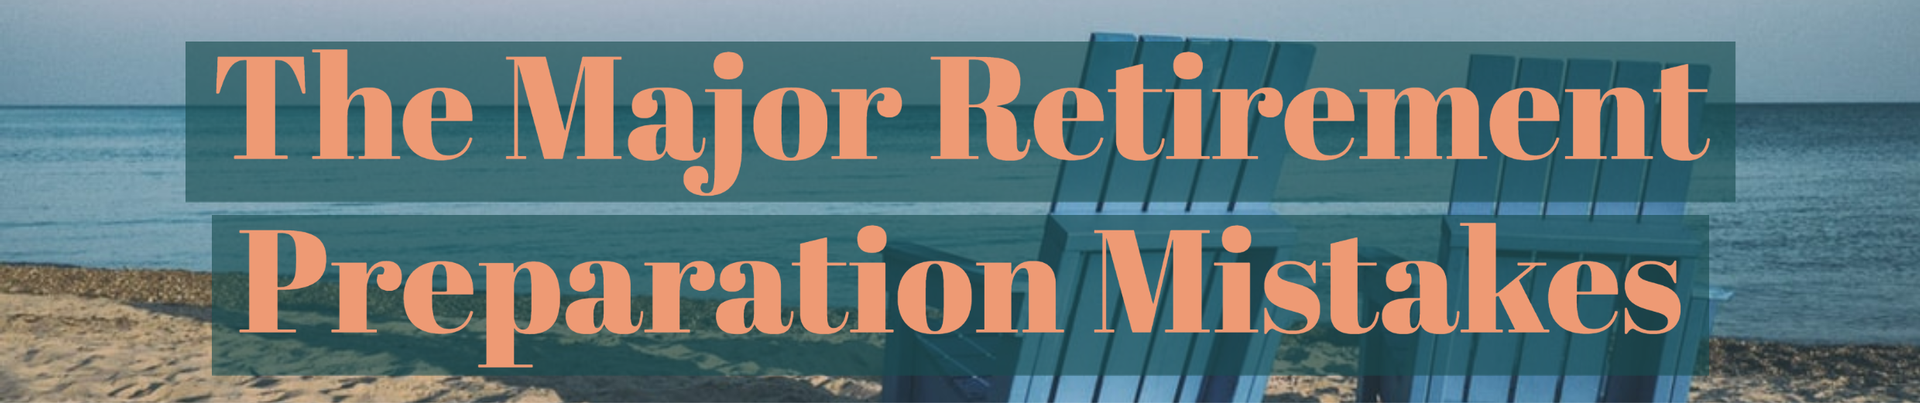 The Major Retirement Preparation Mistakes header image